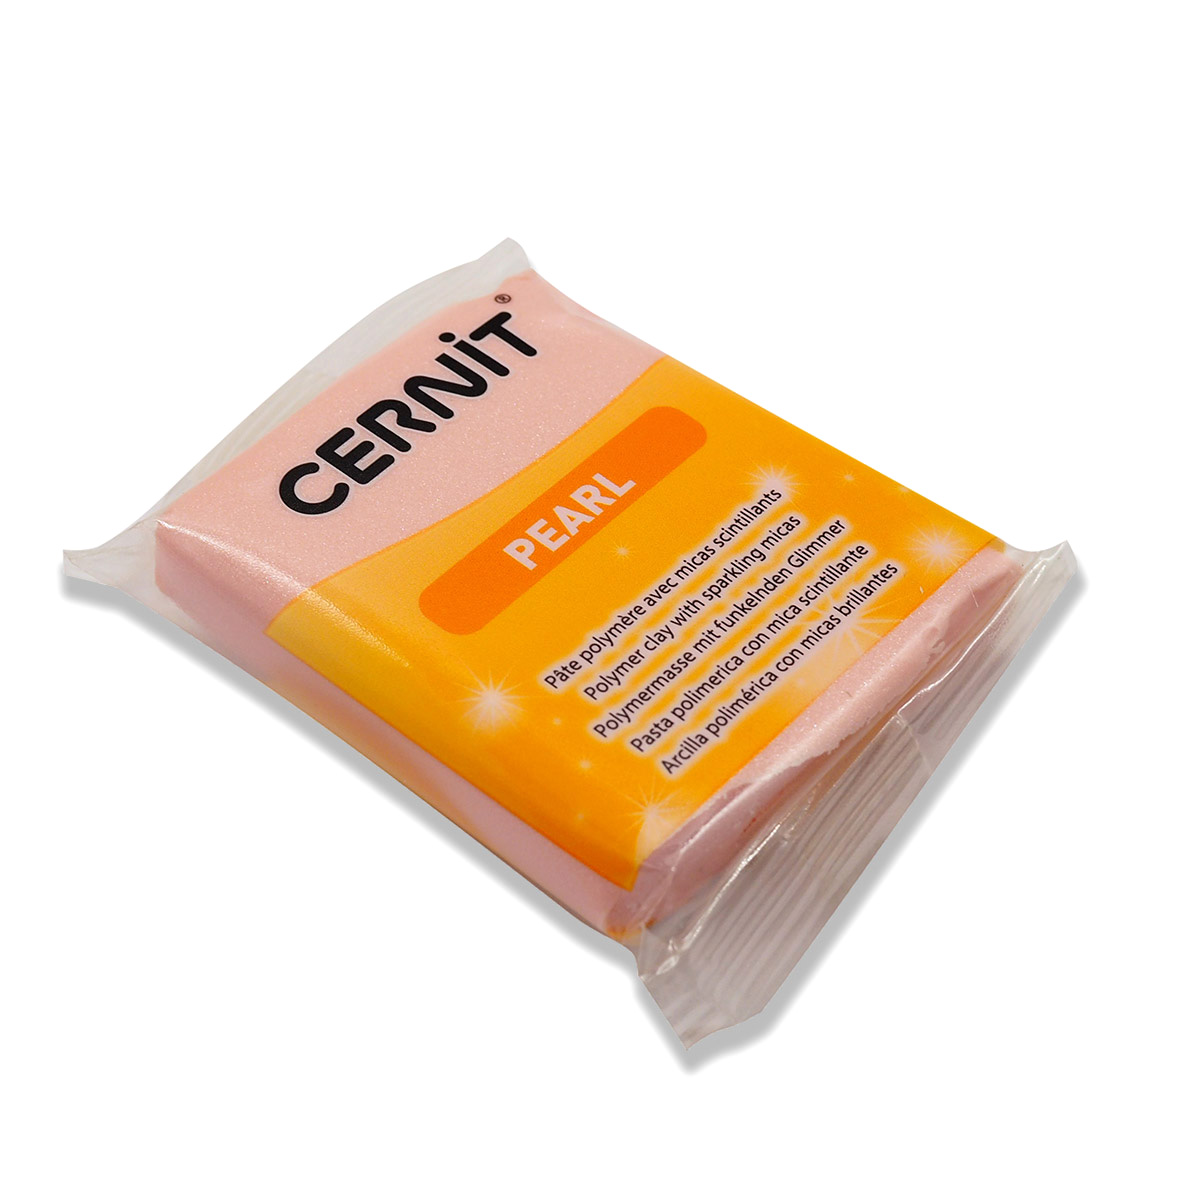 Полимерная глина Cernit пластика запекаемая Цернит pearl 56 гр CE0860060 - фото 8